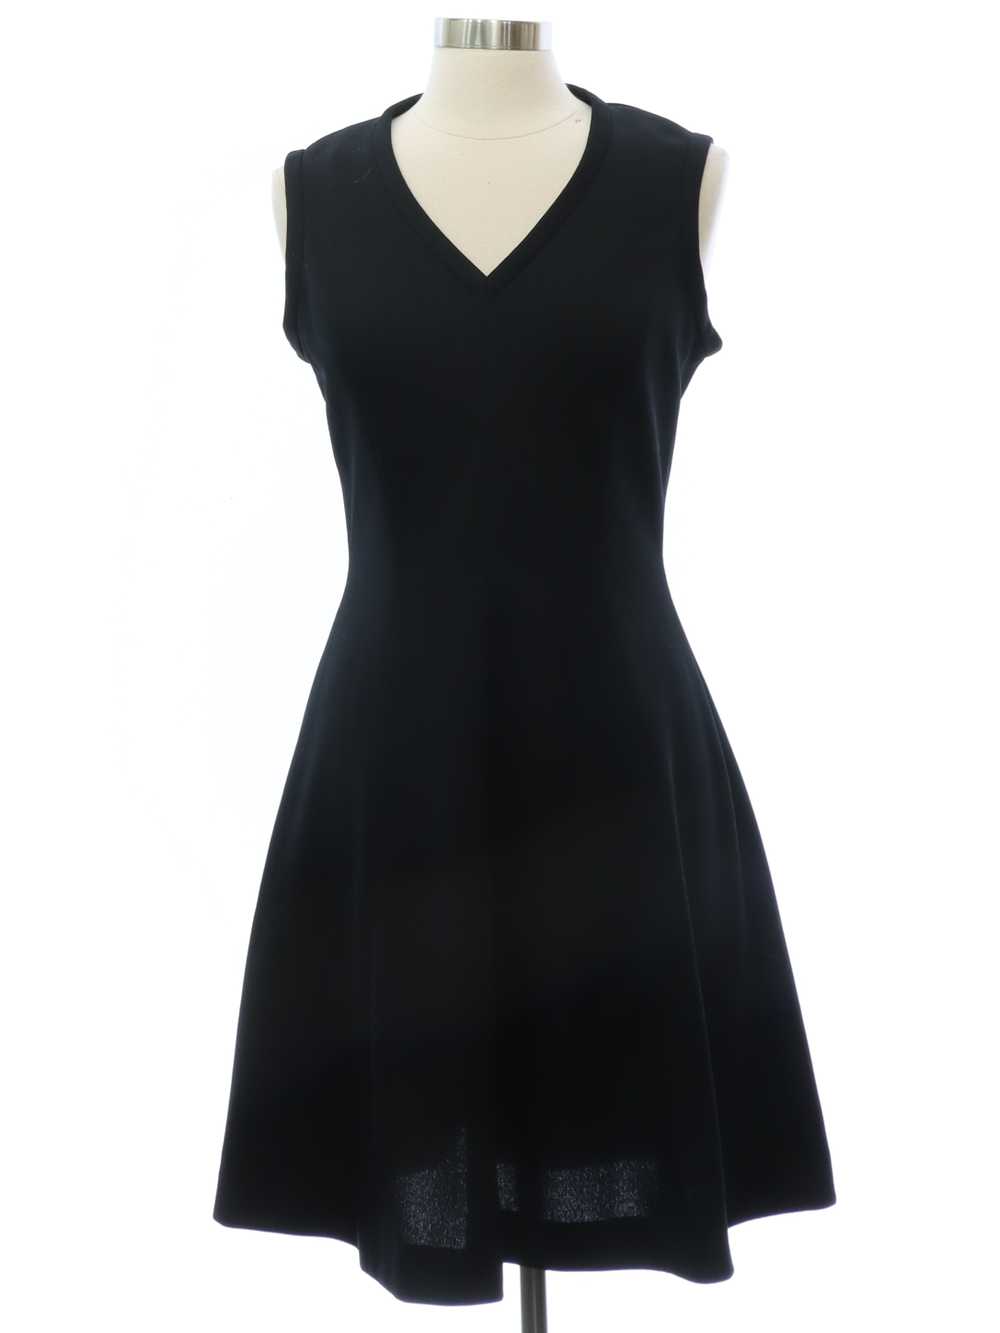 1970's Black Knit Dress - image 1